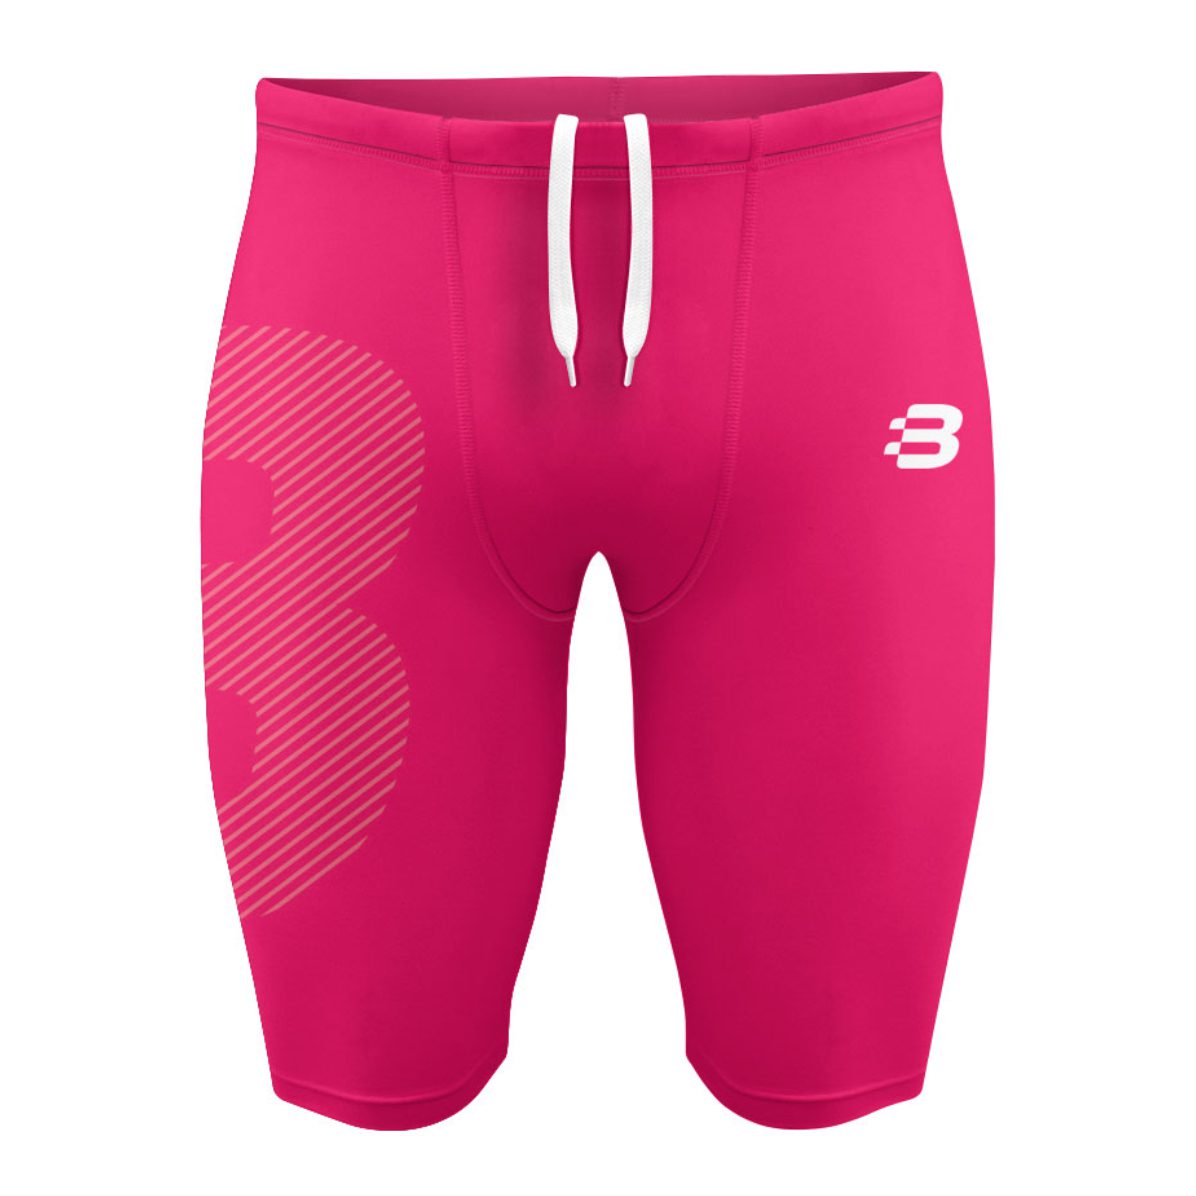 Mens Compression Shorts - Pink - Blackchrome